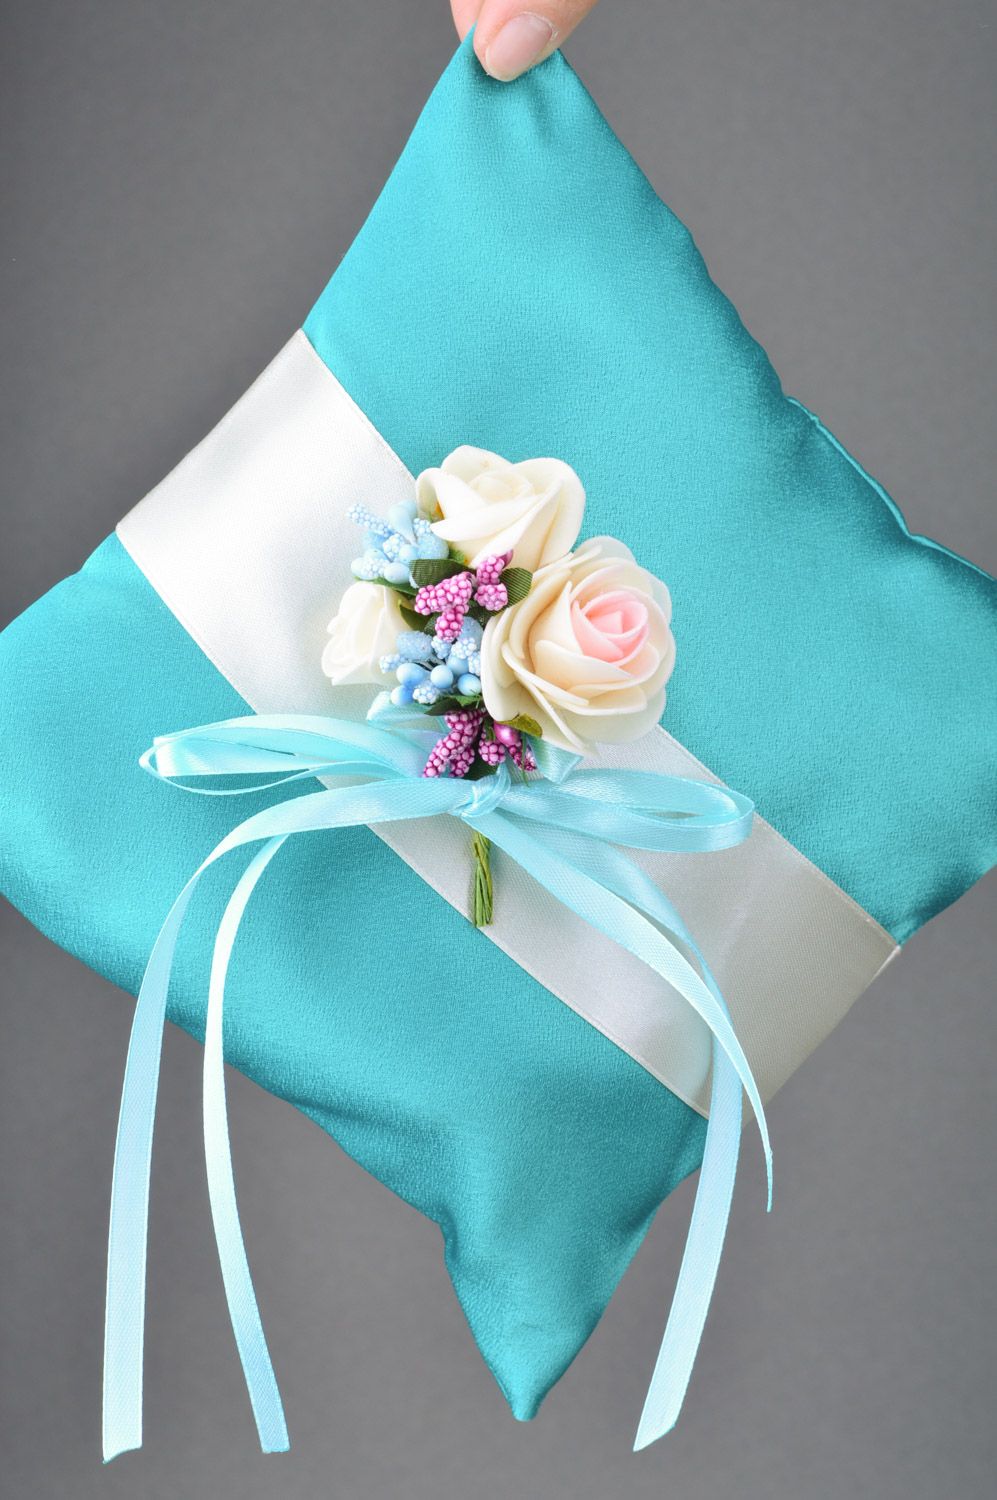 Handmade wedding rings bearer pillow sewn of blue satin with tender flowers  photo 5